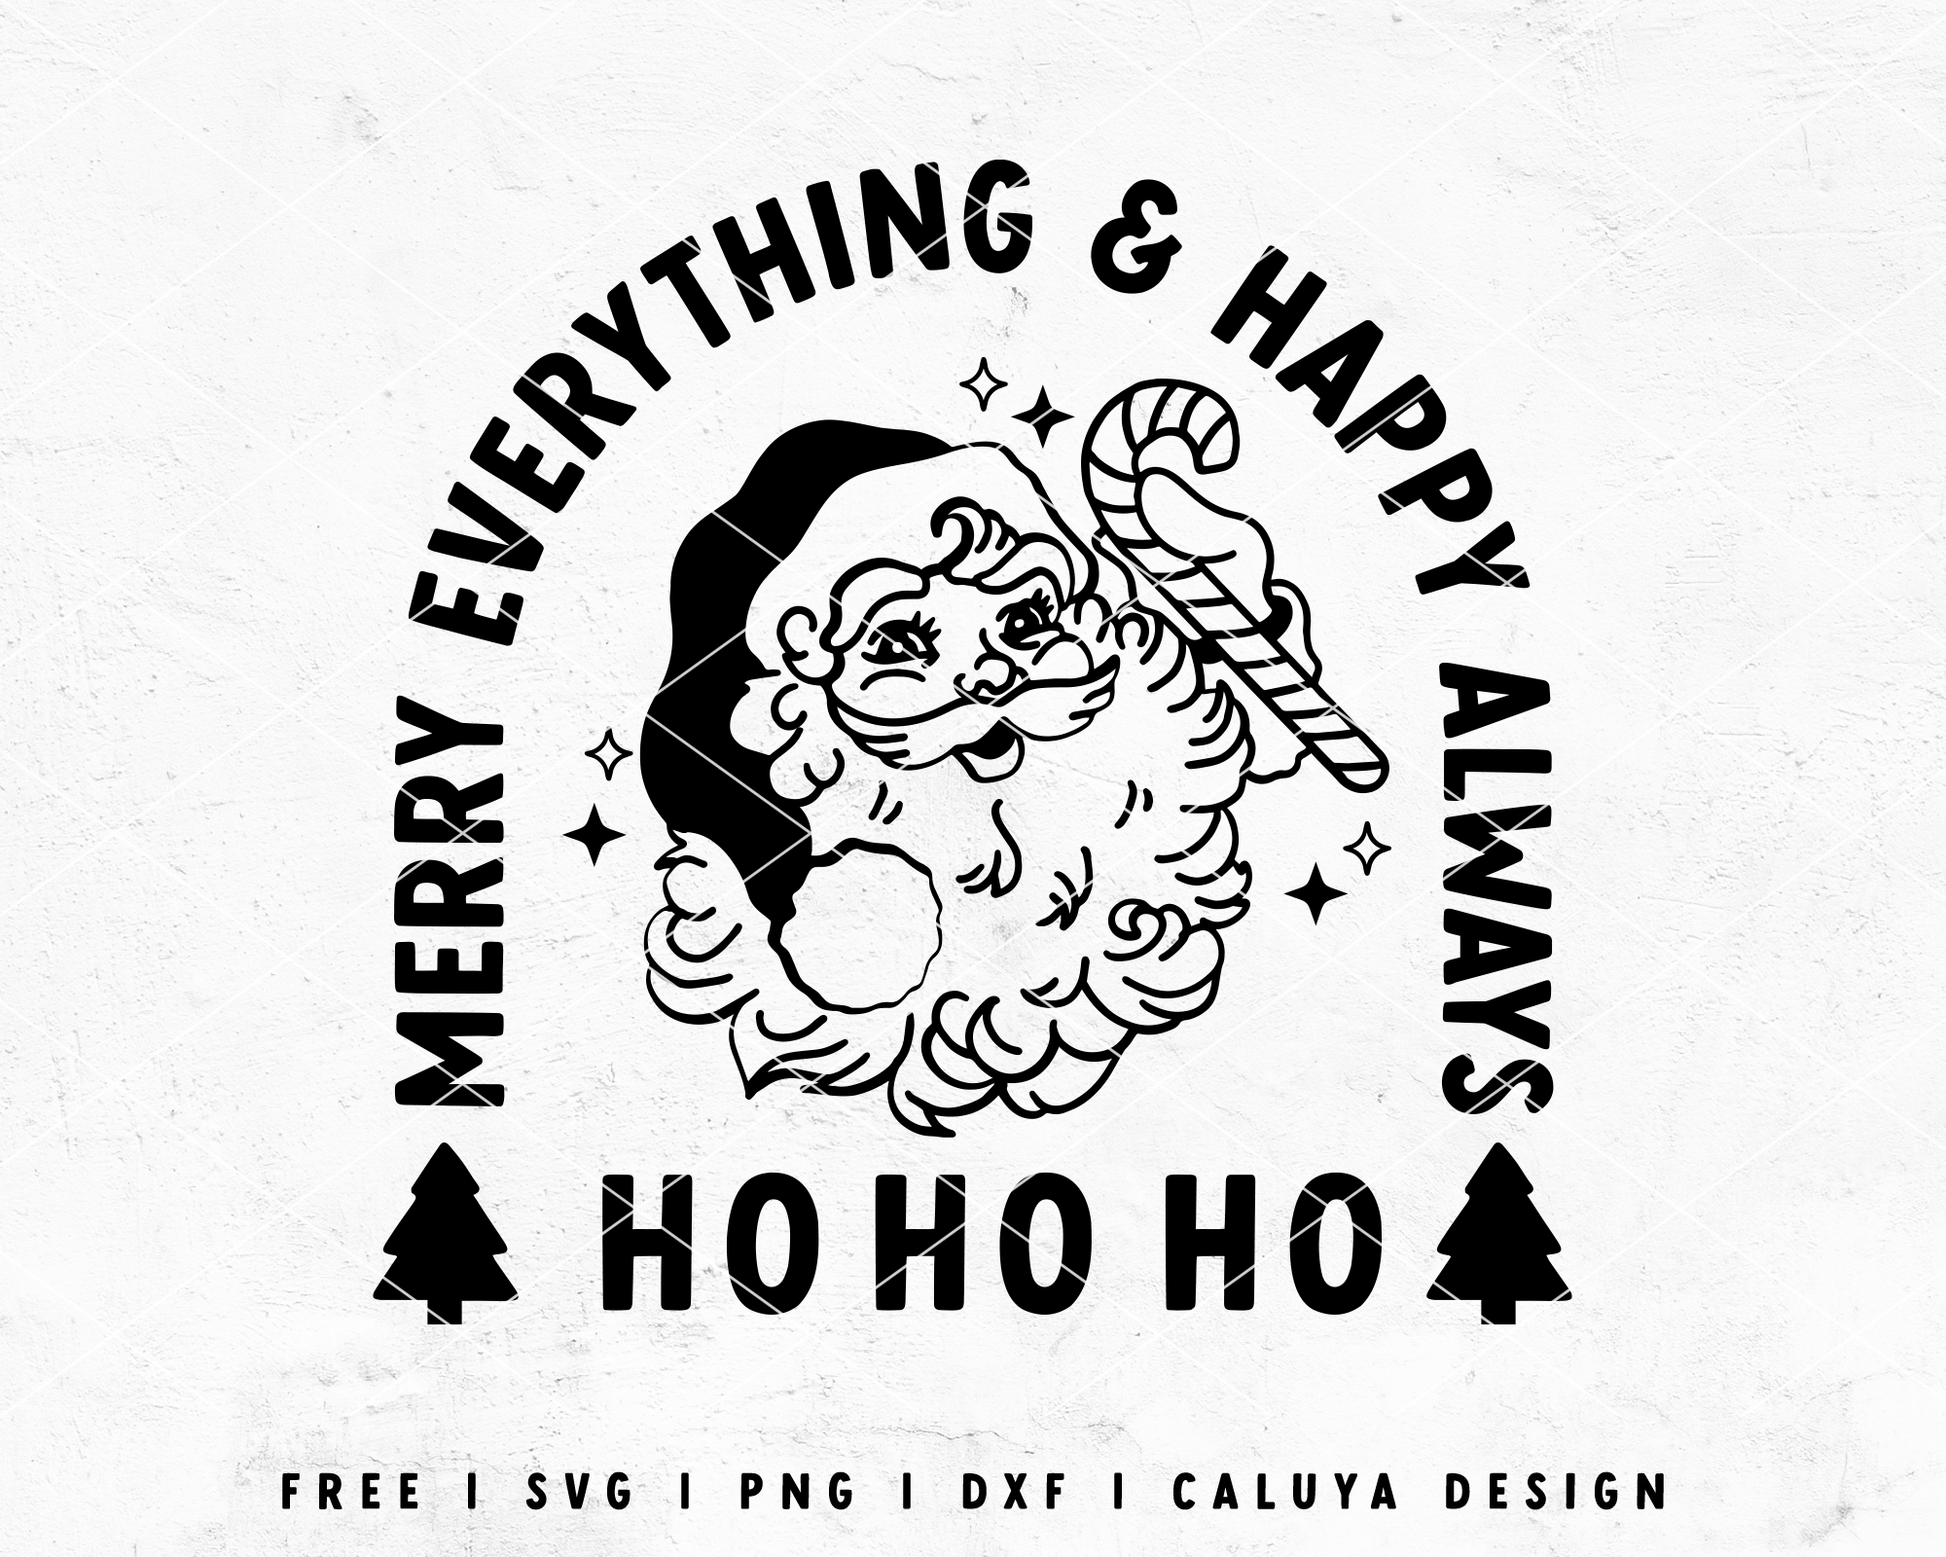 FREE Vintage Santa SVG | Ho Ho Ho SVG Cut File for Cricut, Cameo Silhouette | Free SVG Cut File